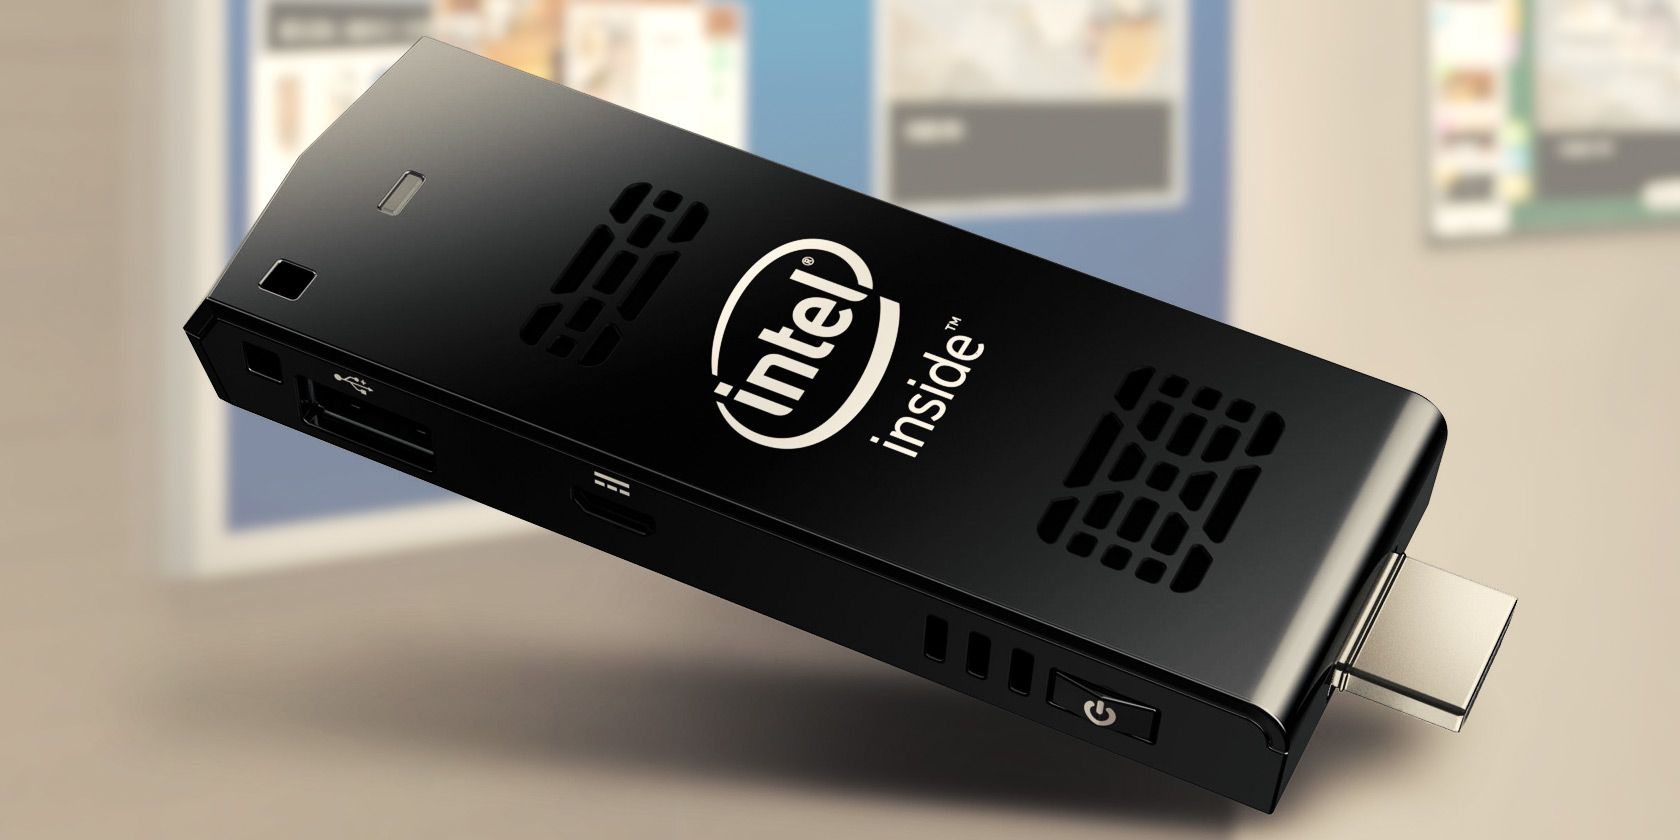 Intel Compute Stick (2015) Review